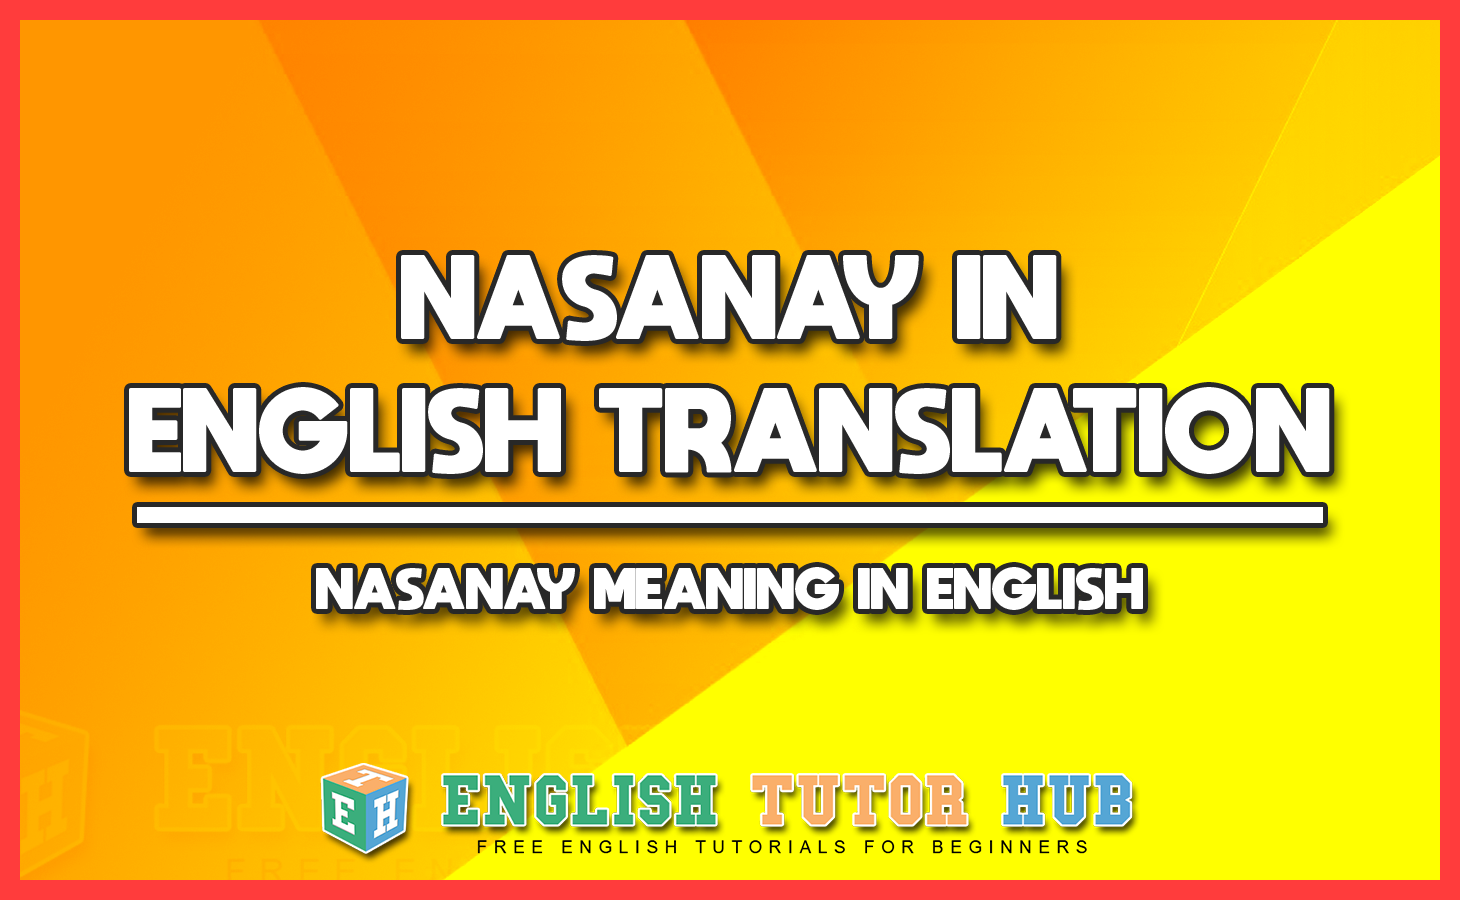 NASANAY IN ENGLISH TRANSLATION - NASANAY MEANING IN ENGLISH